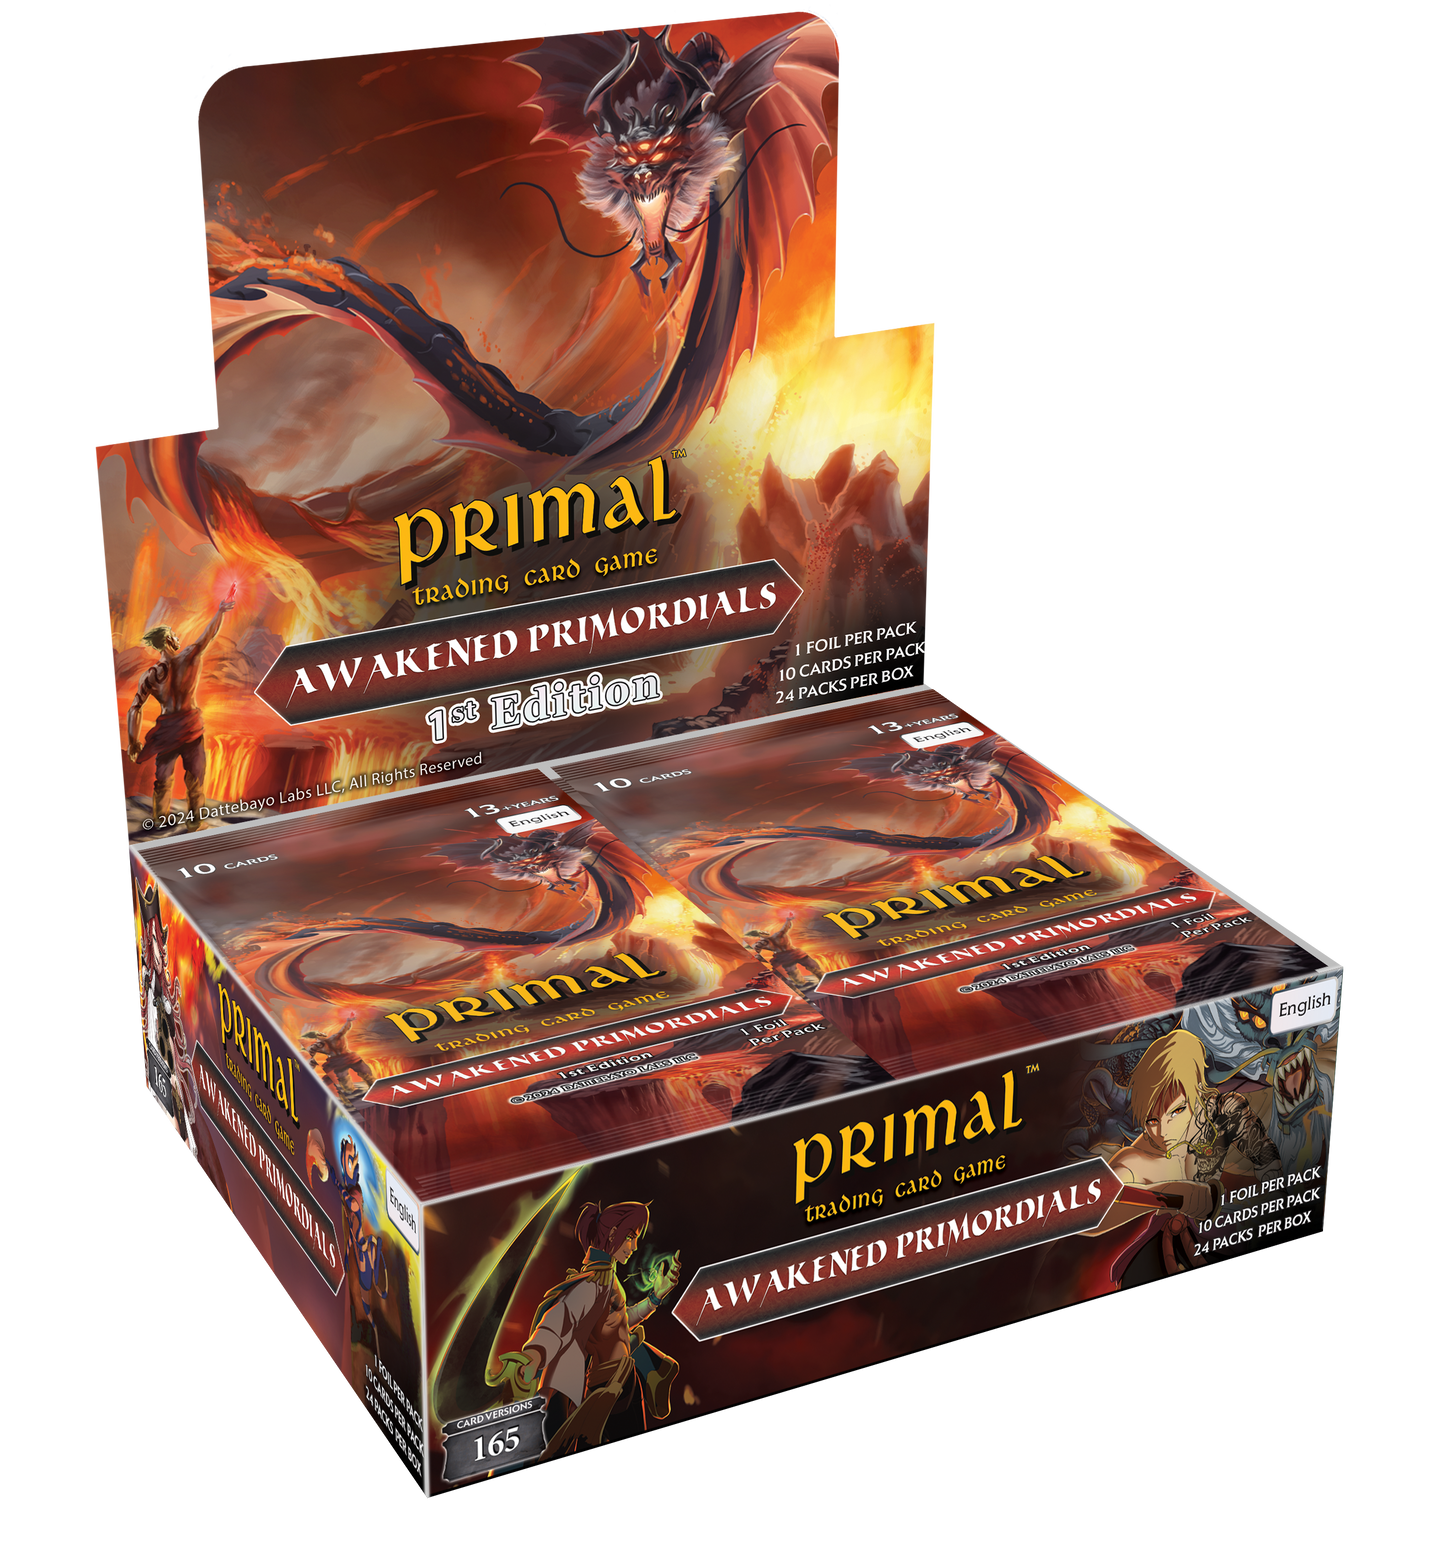 Primal TCG 1st Ed Awakened Primordials Case (10 Booster Box) Order